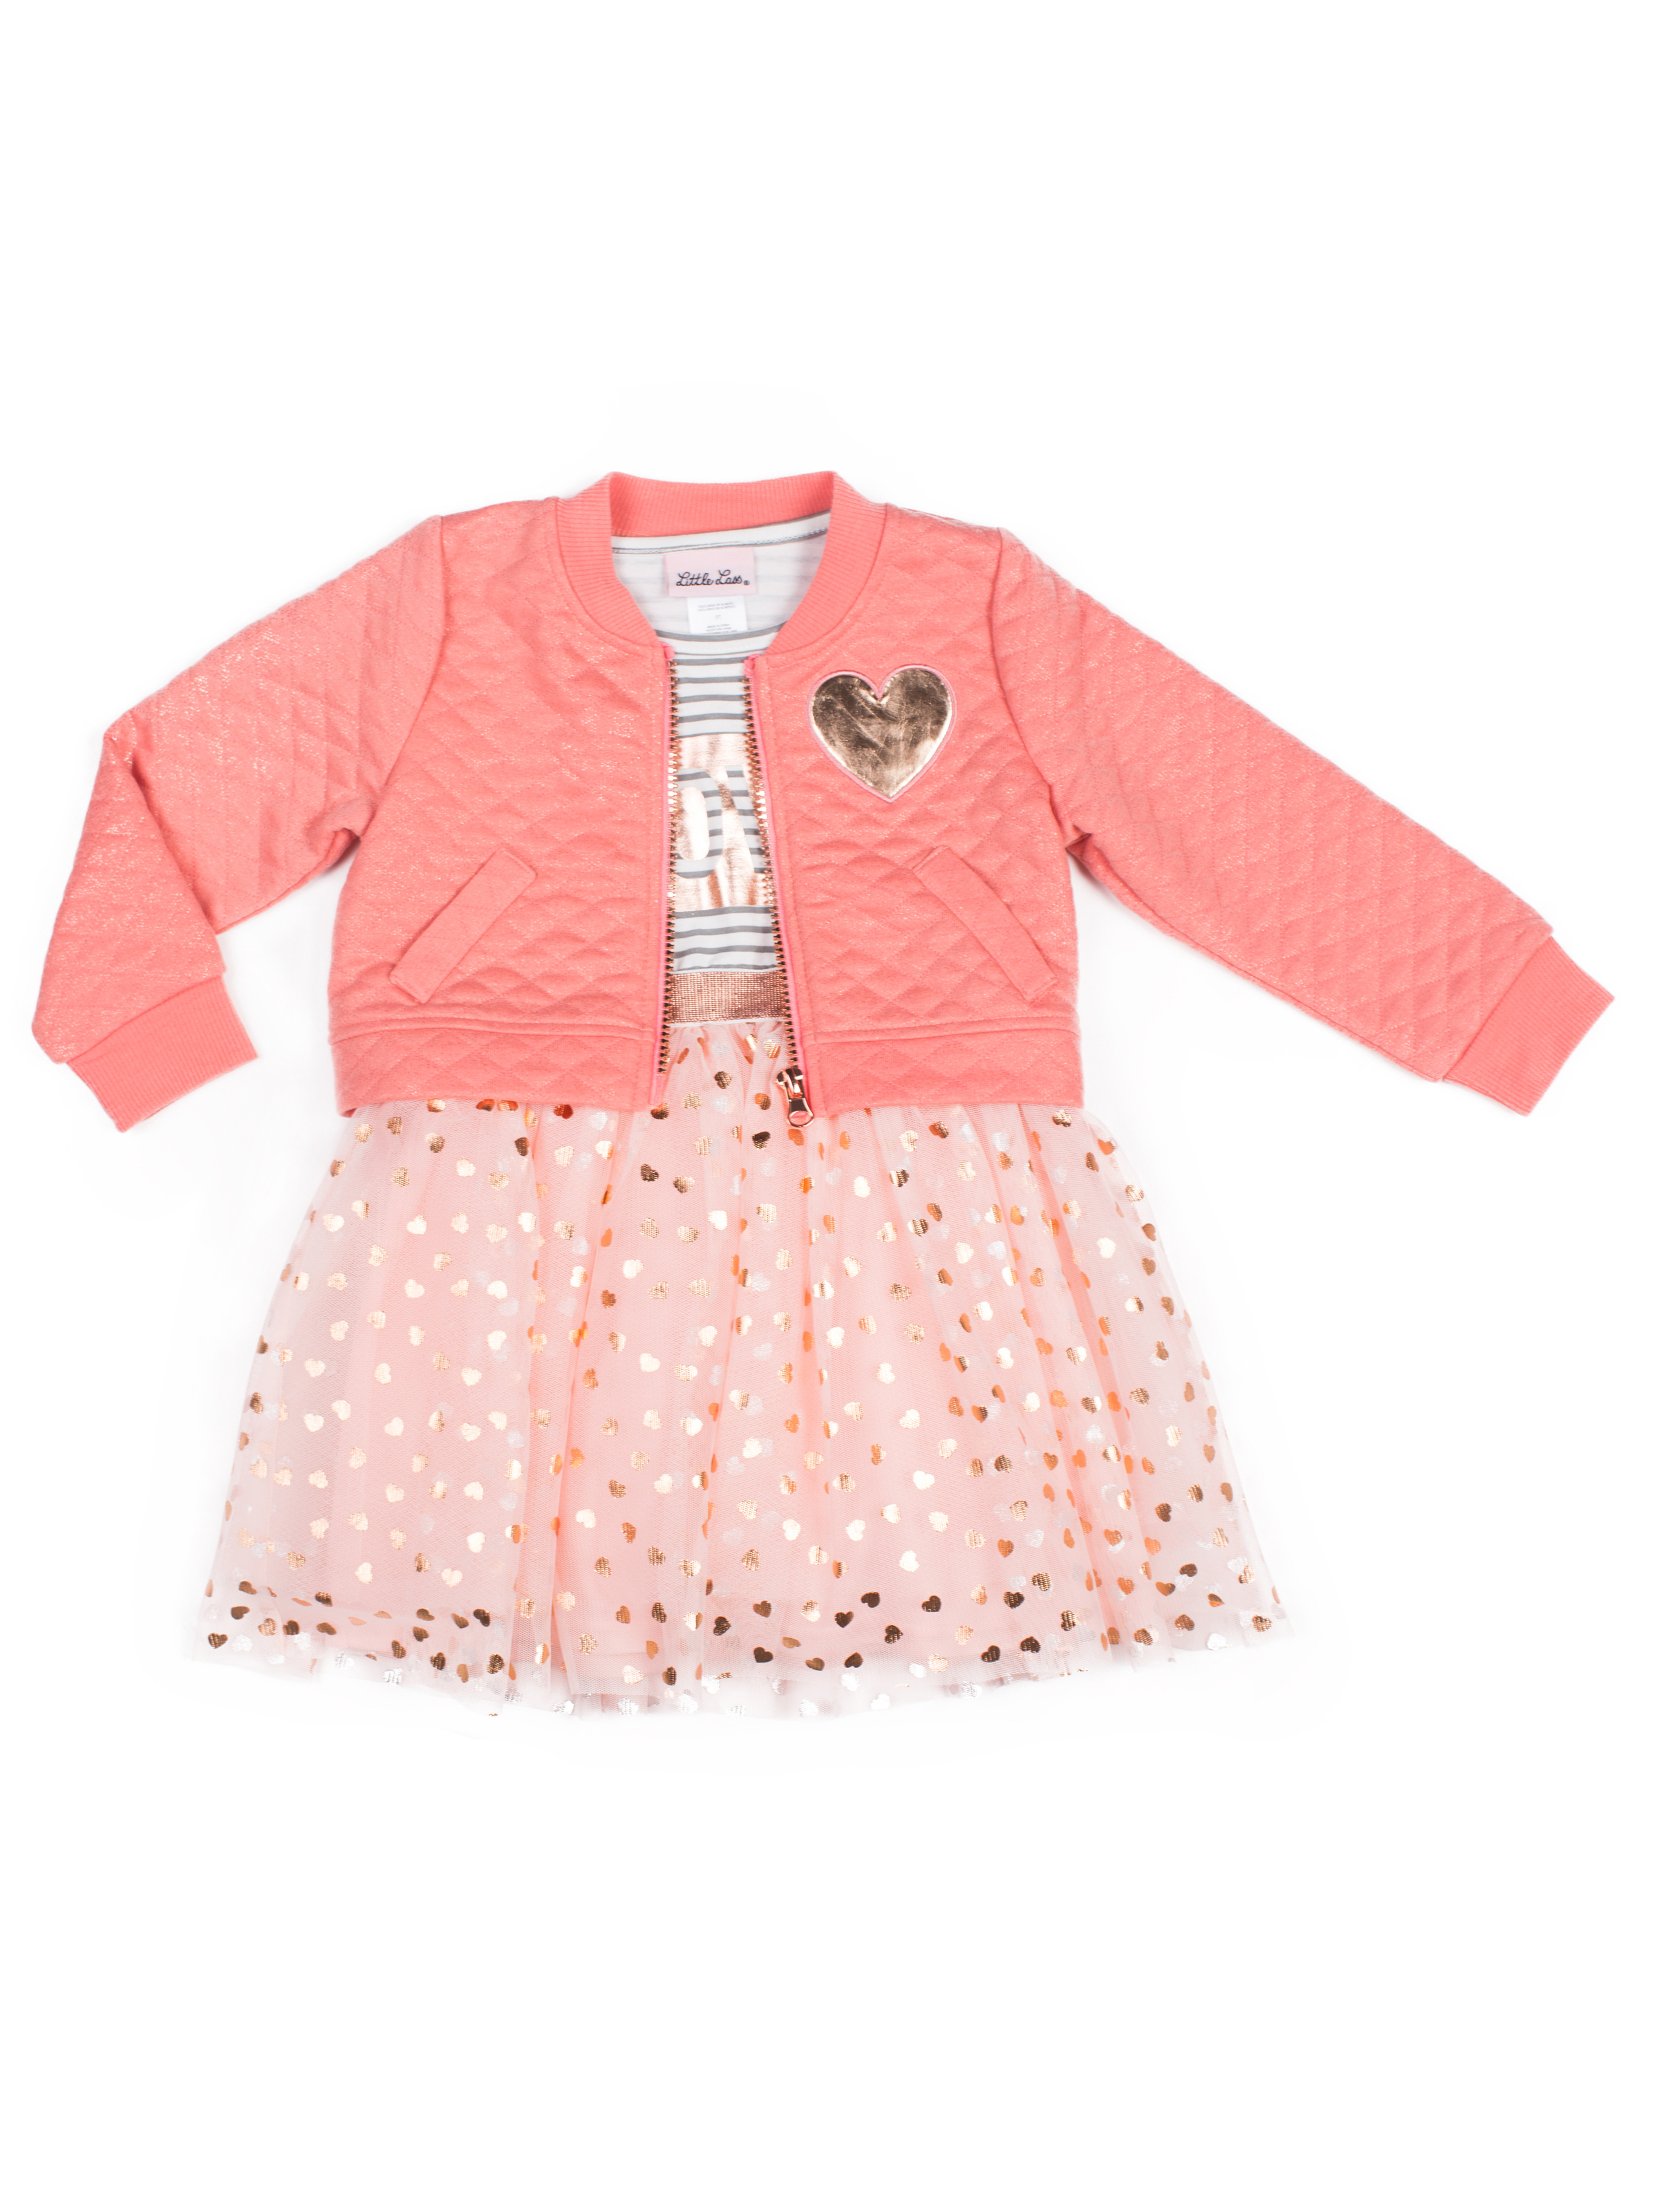 Little Lass Cozy Bomber Jacket and Fashion Tutu Dress, 2-Piece (Little Girls) - image 1 of 3